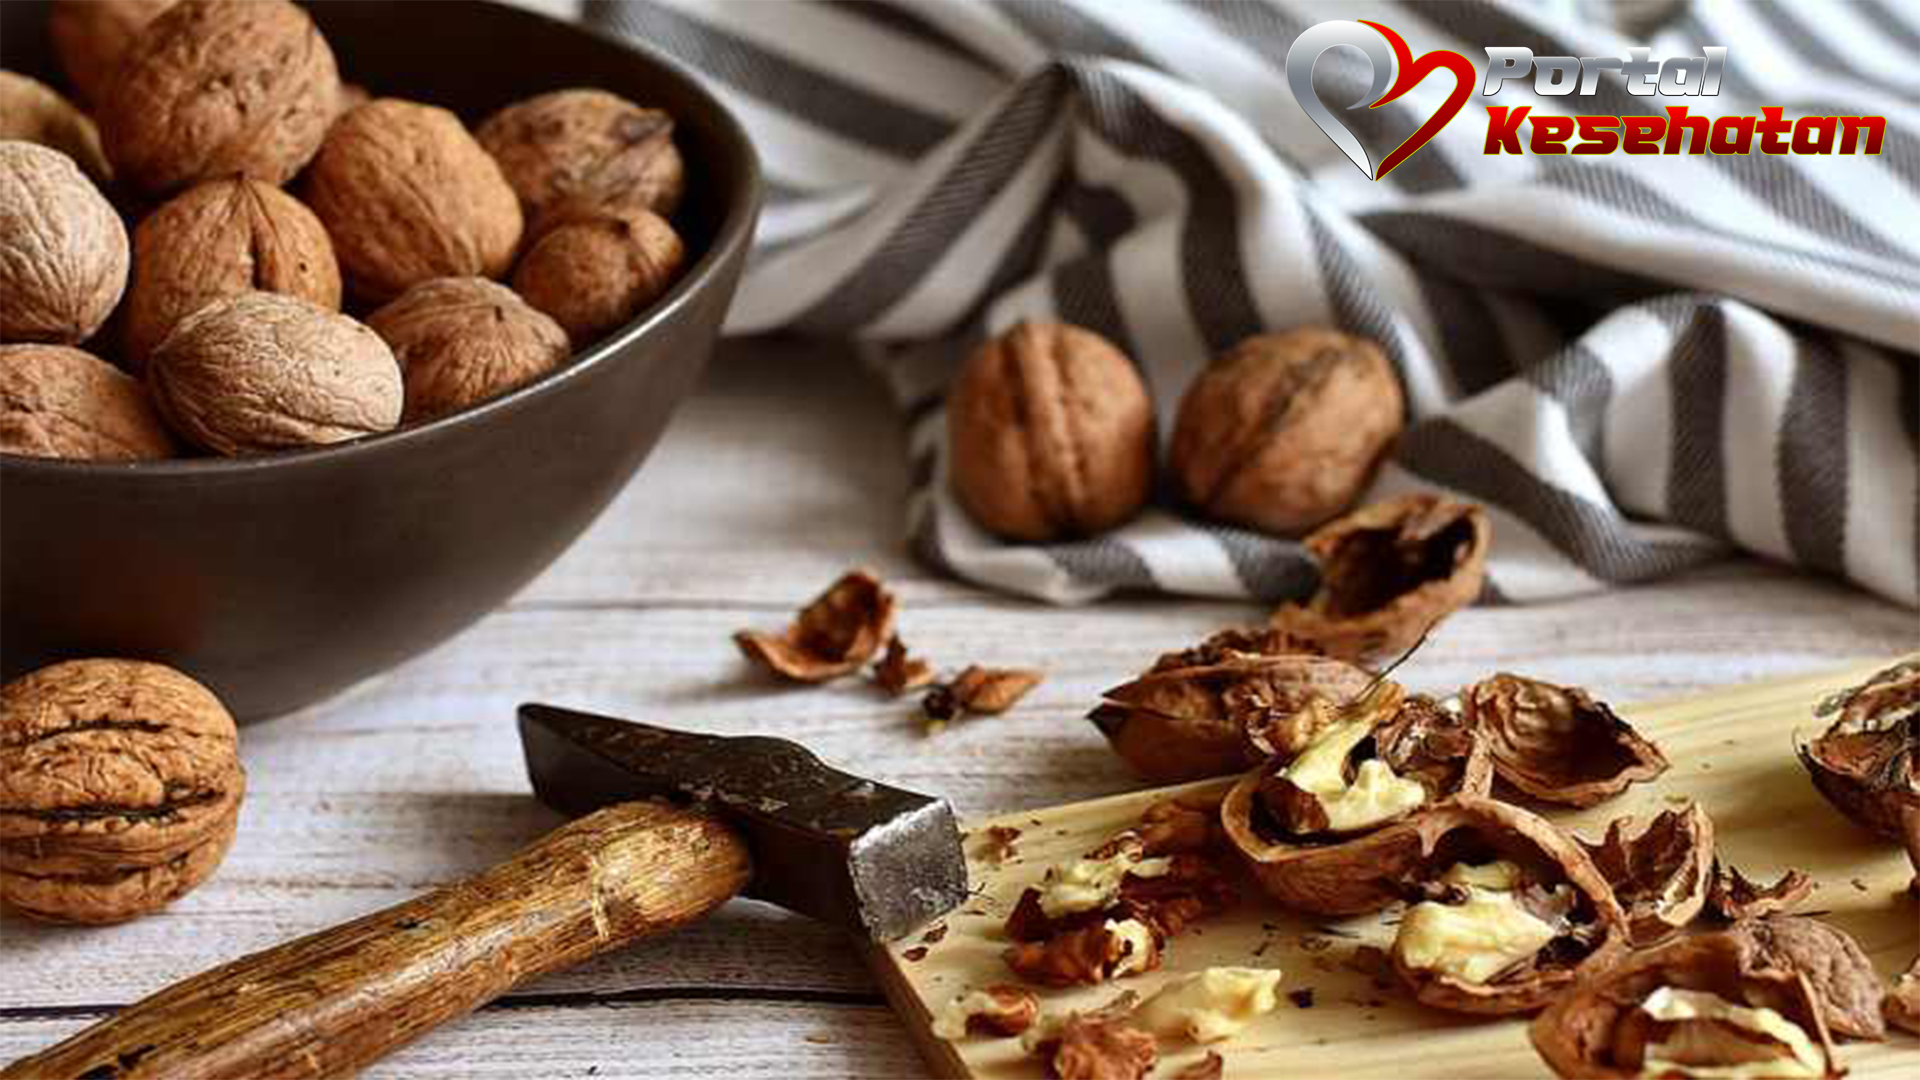 Manfaat Kacang Walnut untuk Kesehatan